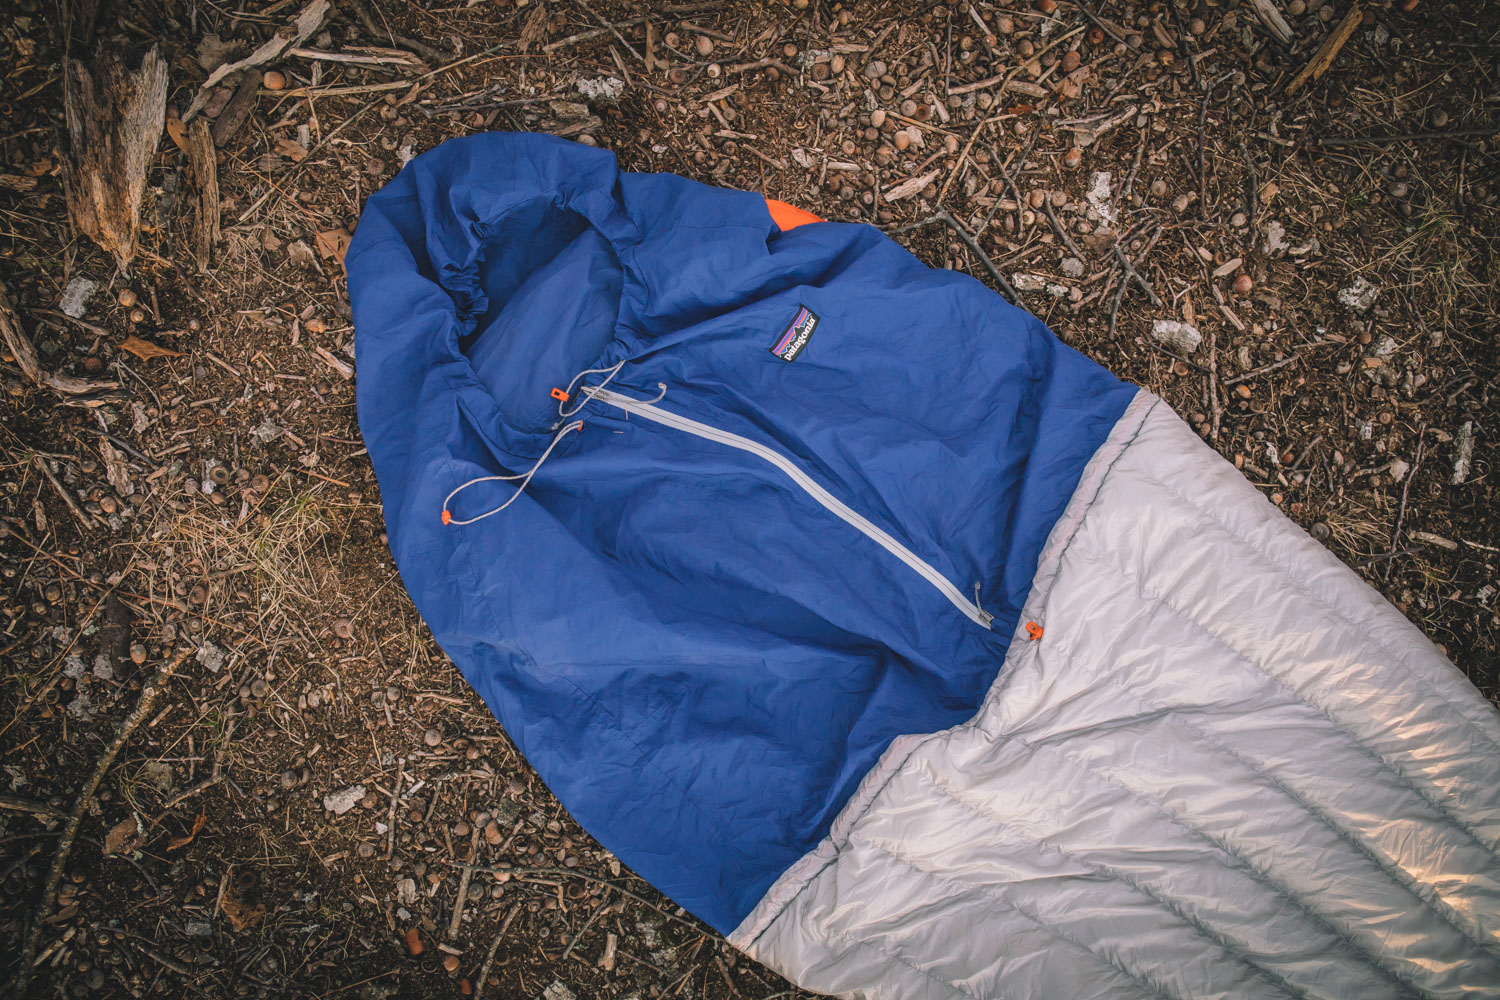 Patagonia Hybrid Sleeping Bag Review